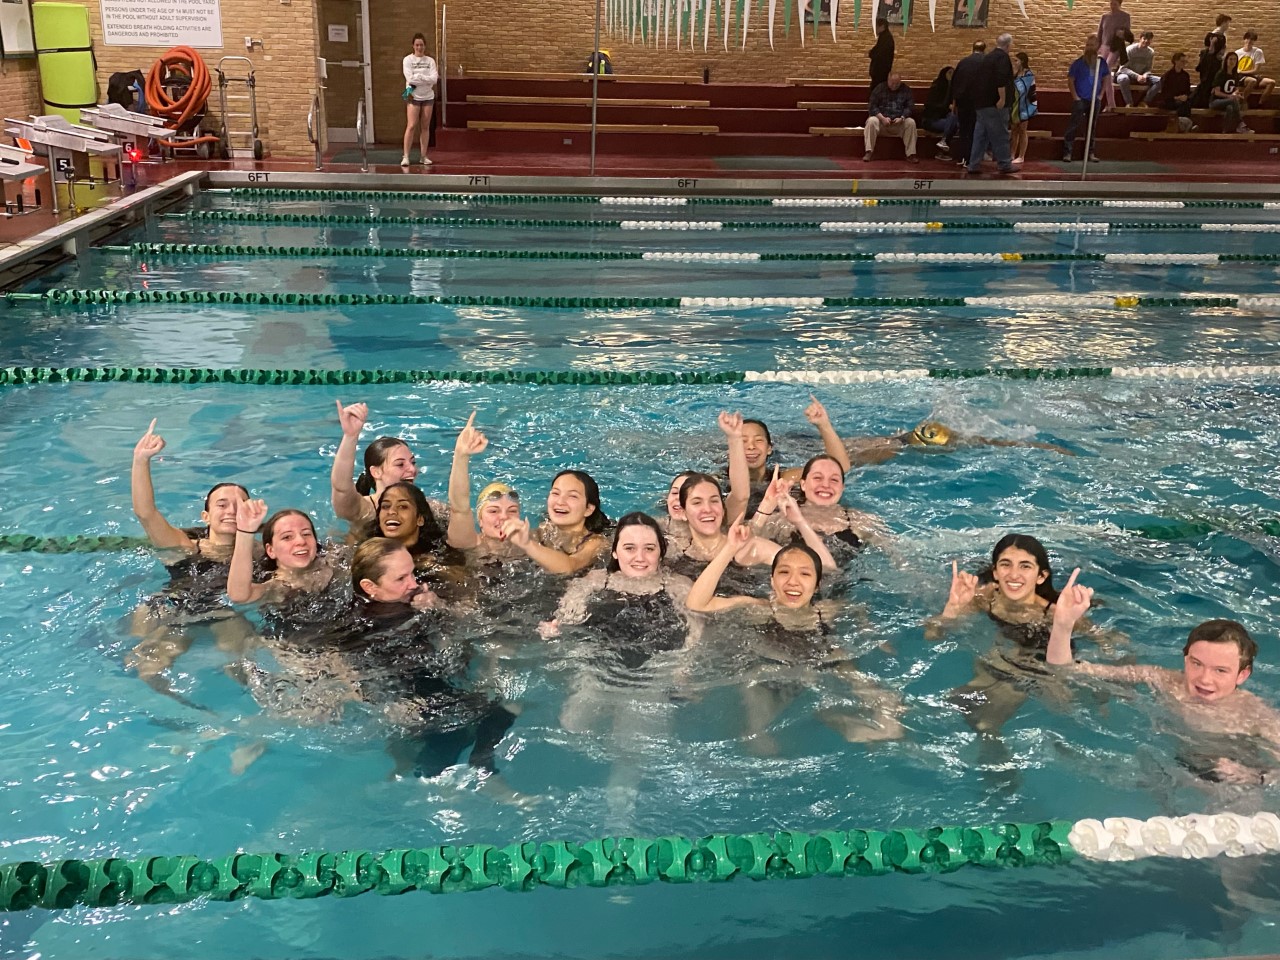 The Girls Swim Team celebrates their win in the pool. 